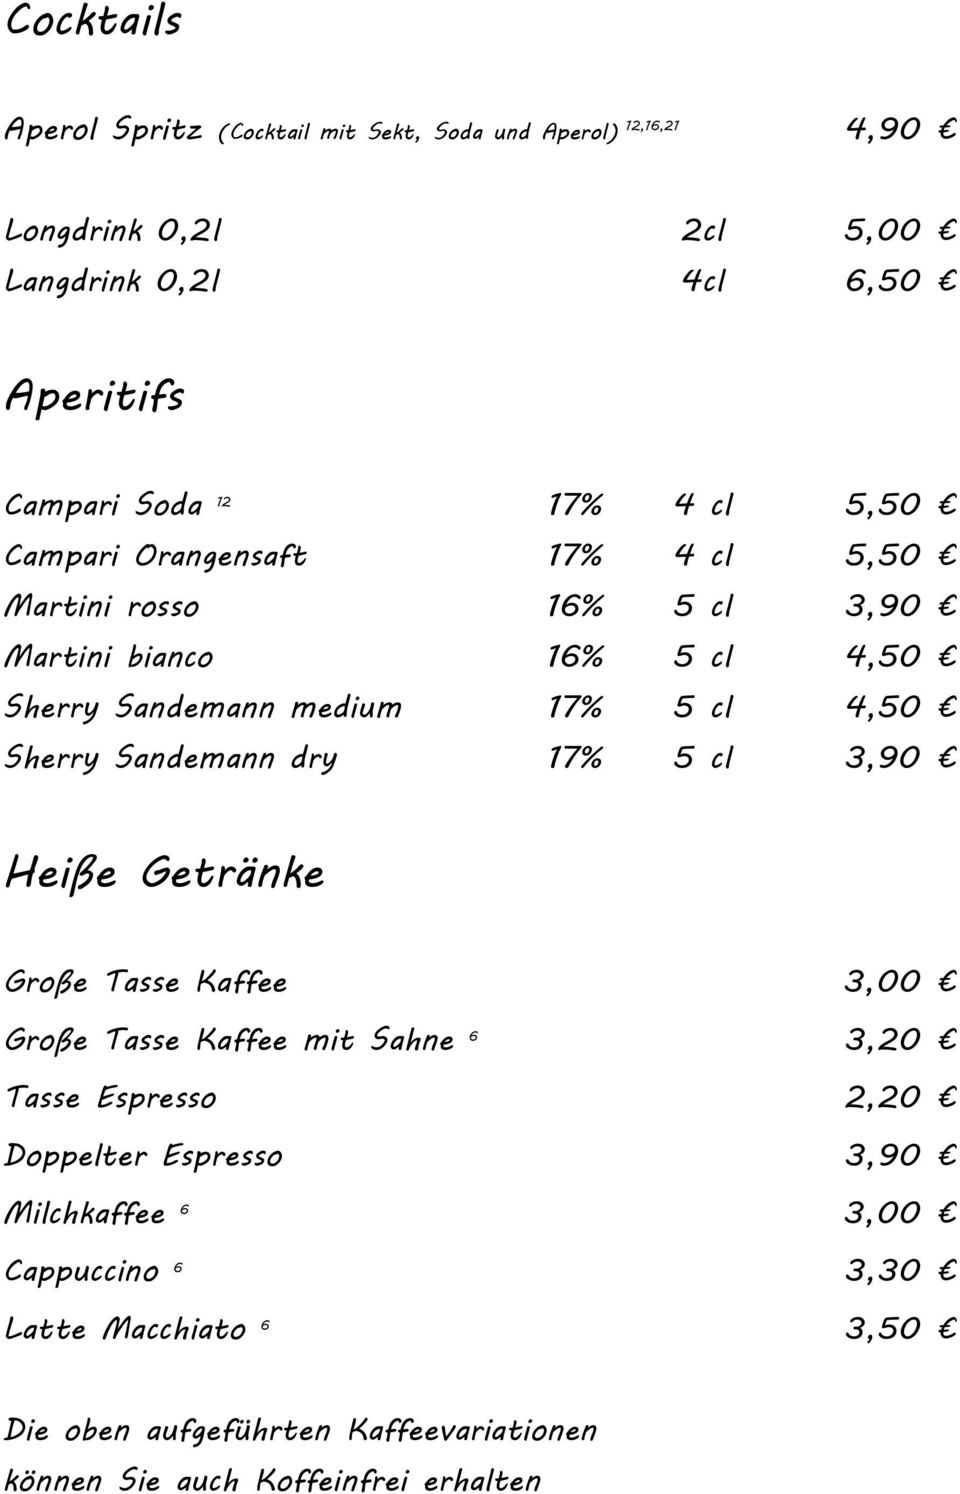 Sherry Sandemann dry 17% 5 cl 3,90 Heiße Getränke Große Tasse Kaffee 3,00 Große Tasse Kaffee mit Sahne 6 3,20 Tasse Espresso 2,20 Doppelter